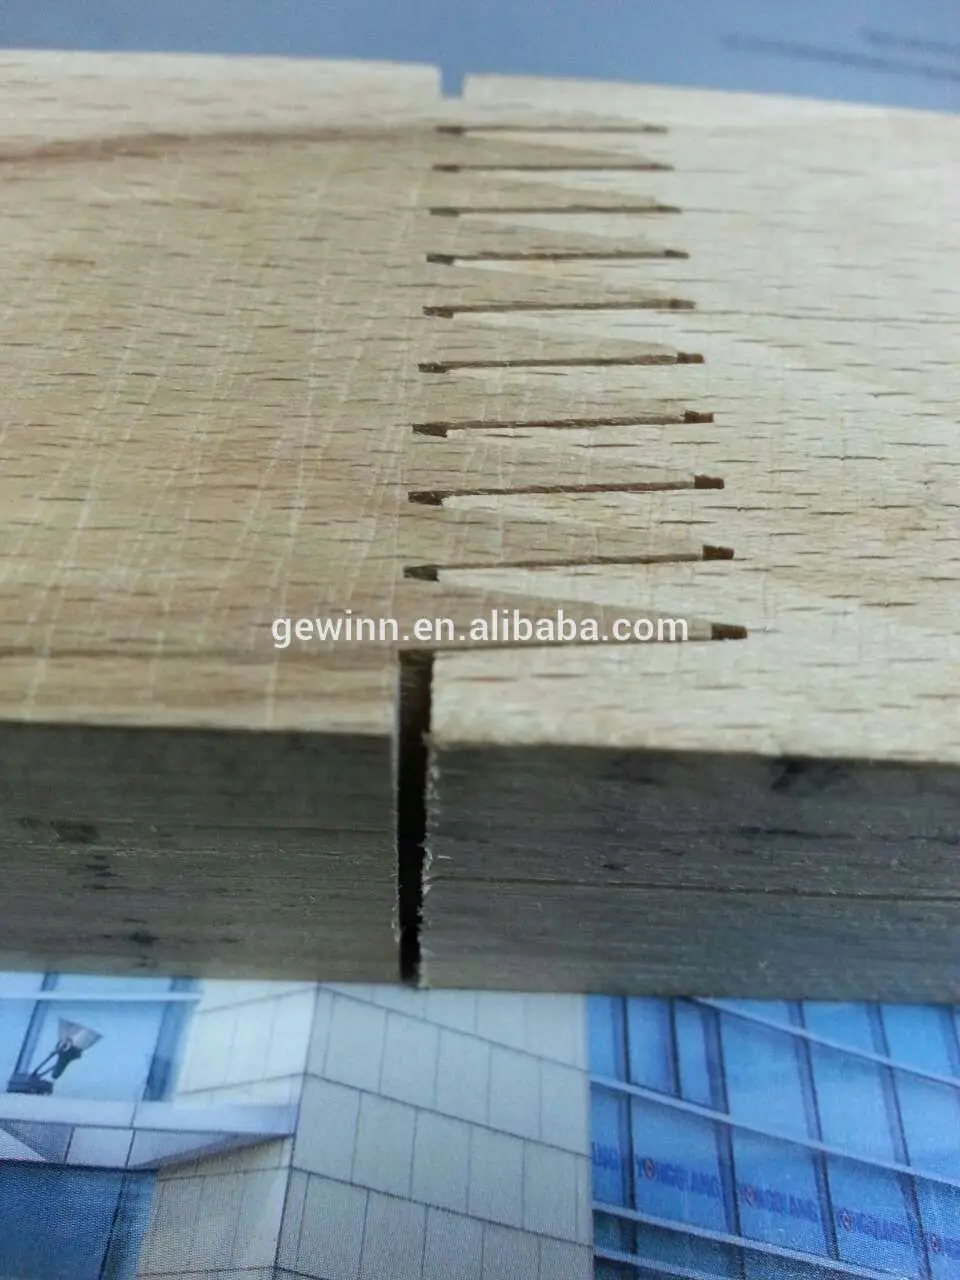 woodworking tools and accessories single head 3.5kw woodworking cnc machine Gewinn Warranty